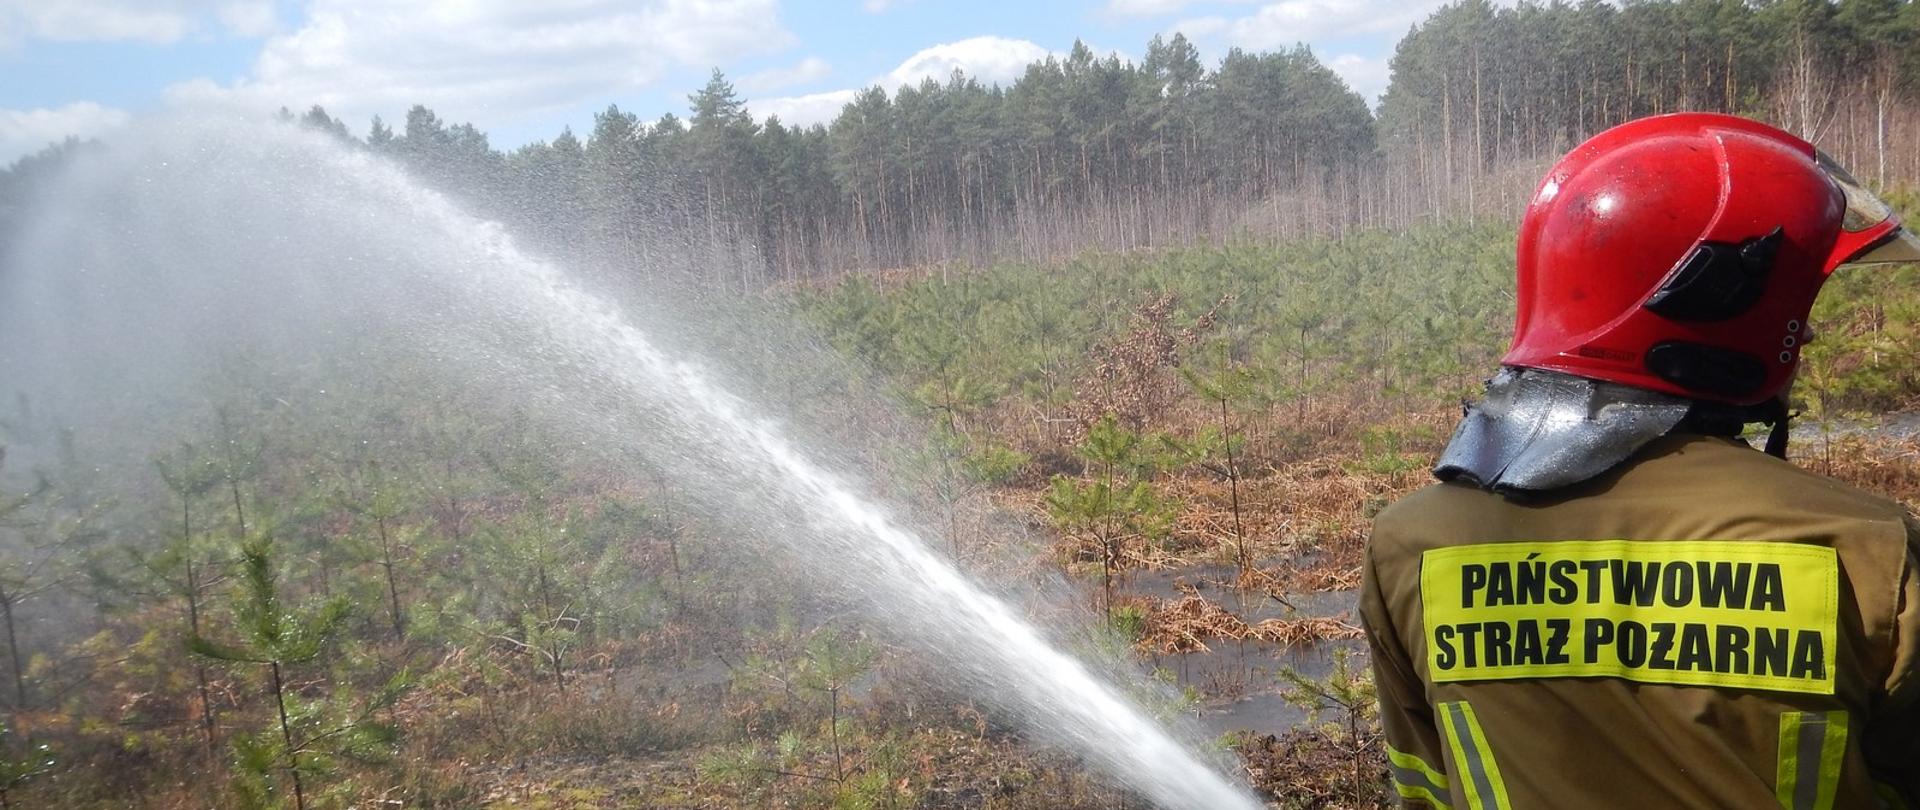 strażak podaje jeden prąd wody na młody las